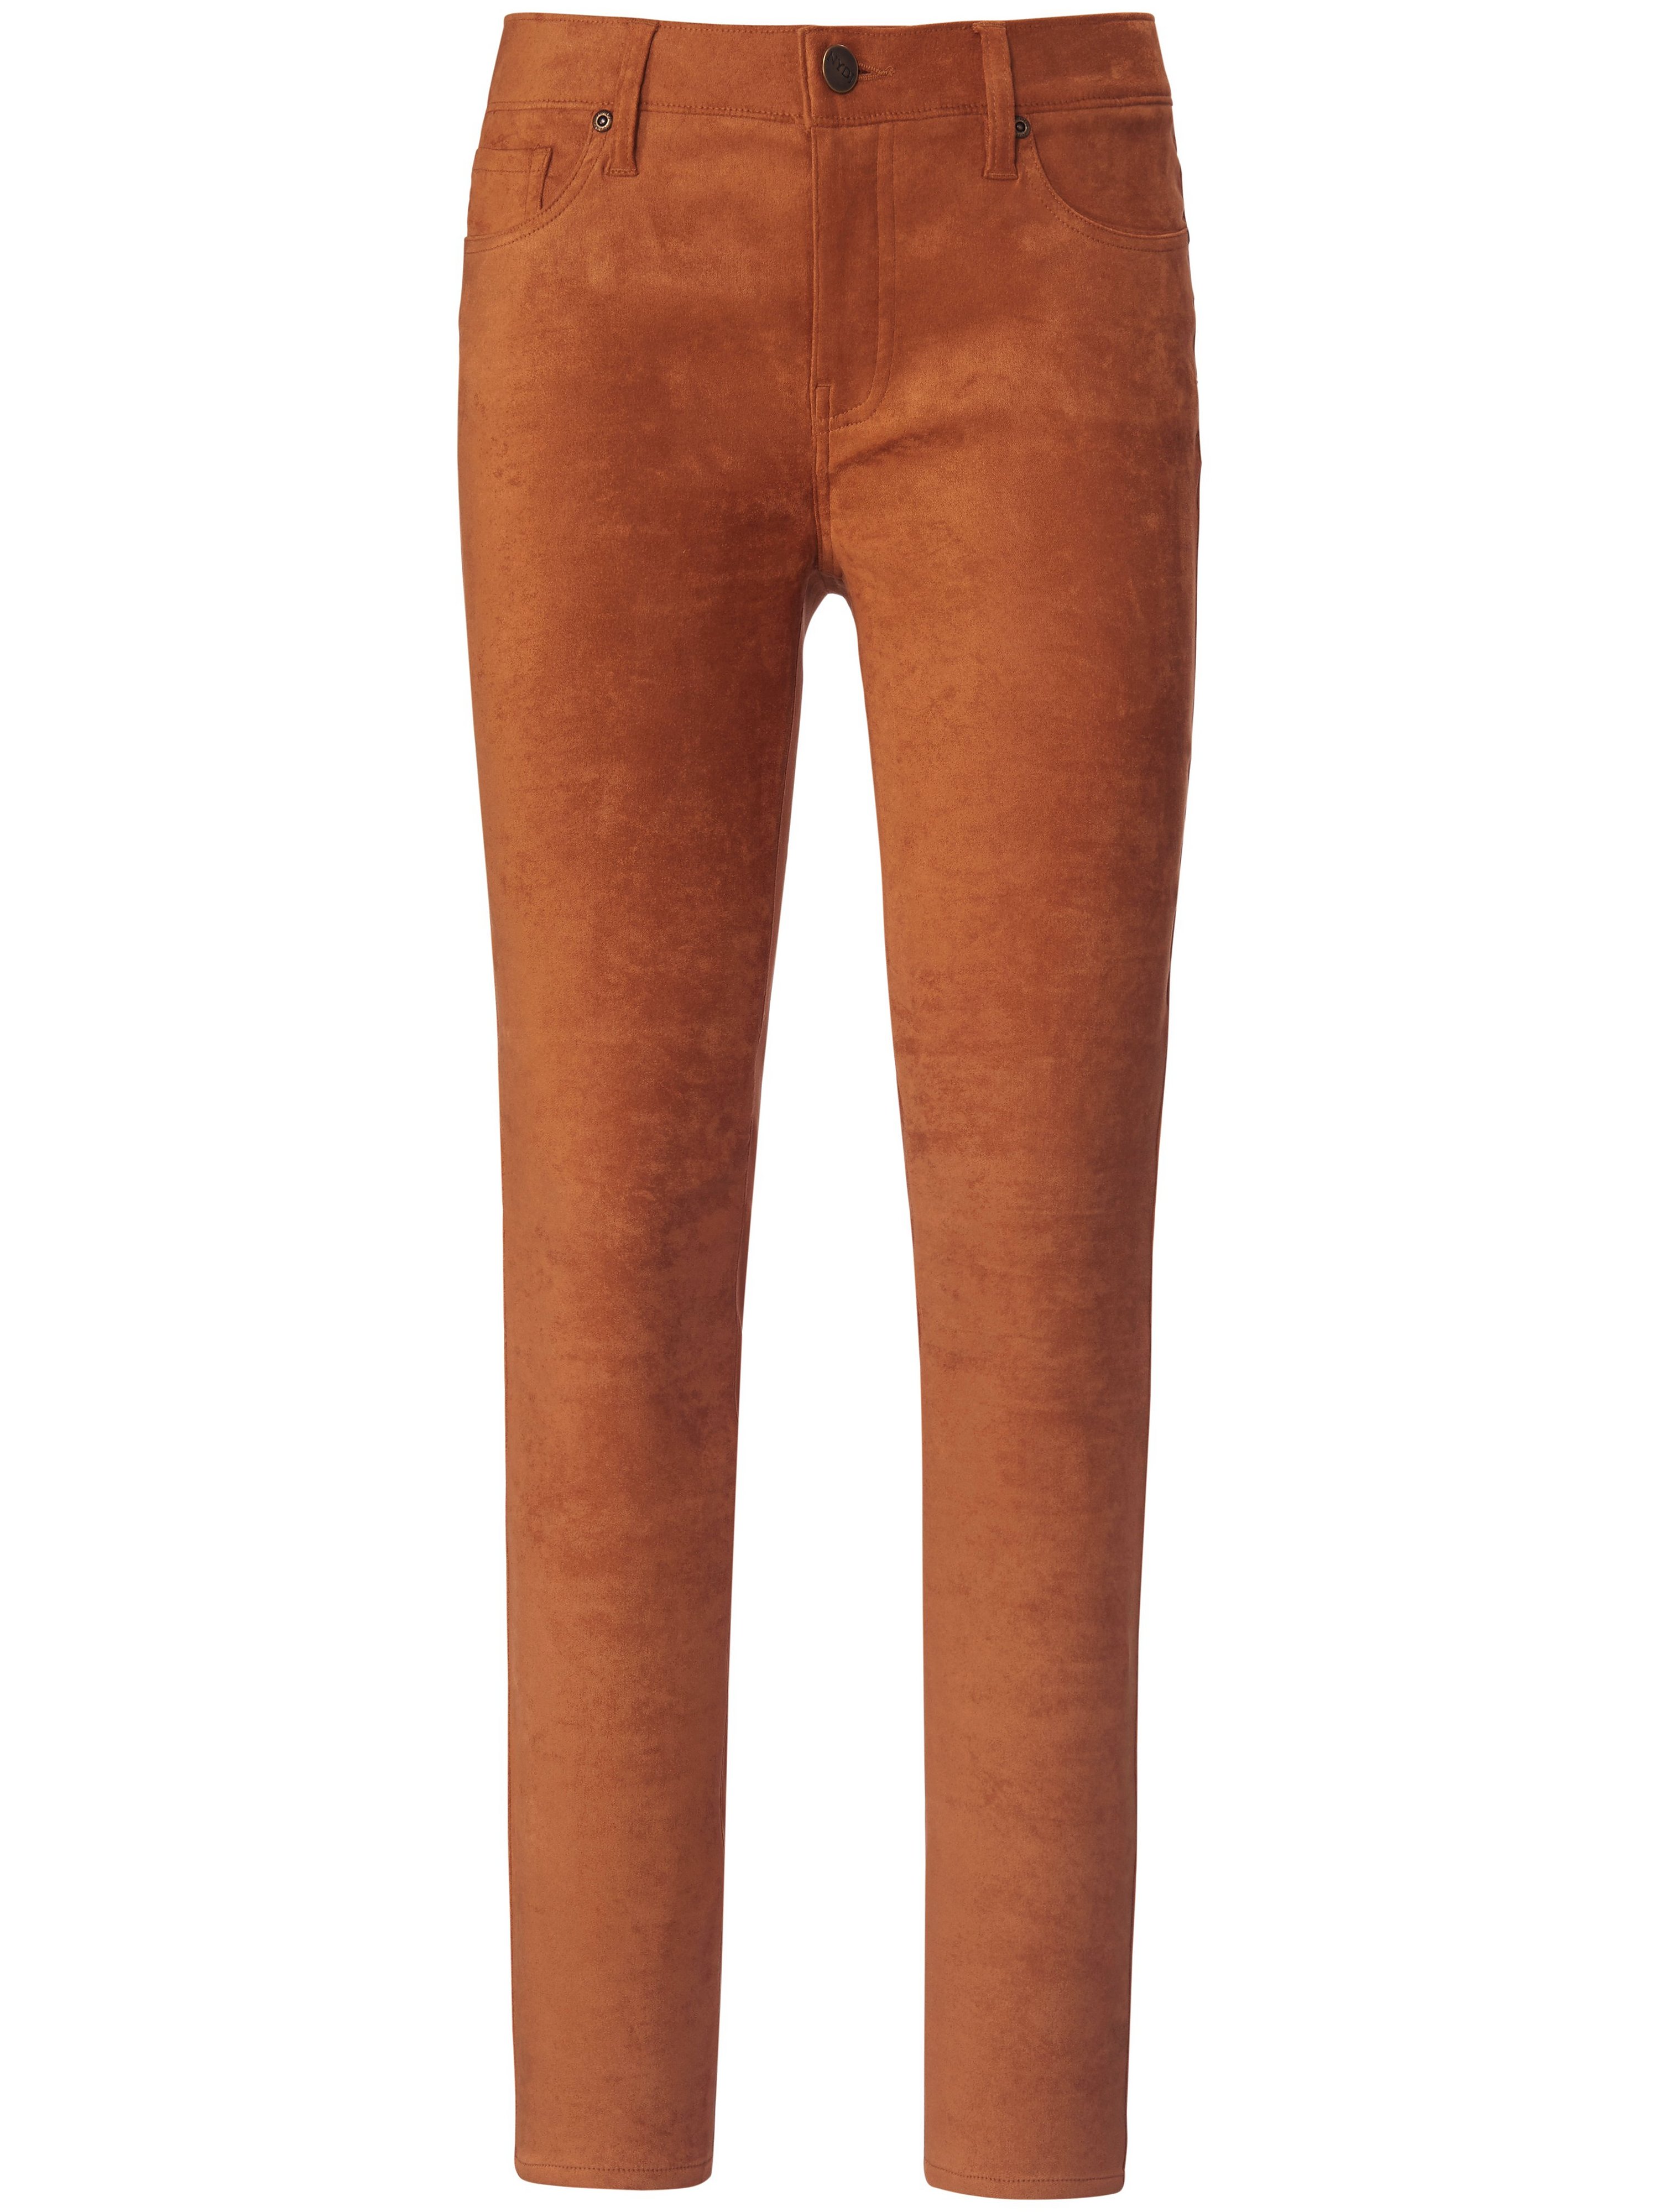 Le pantalon  NYDJ marron